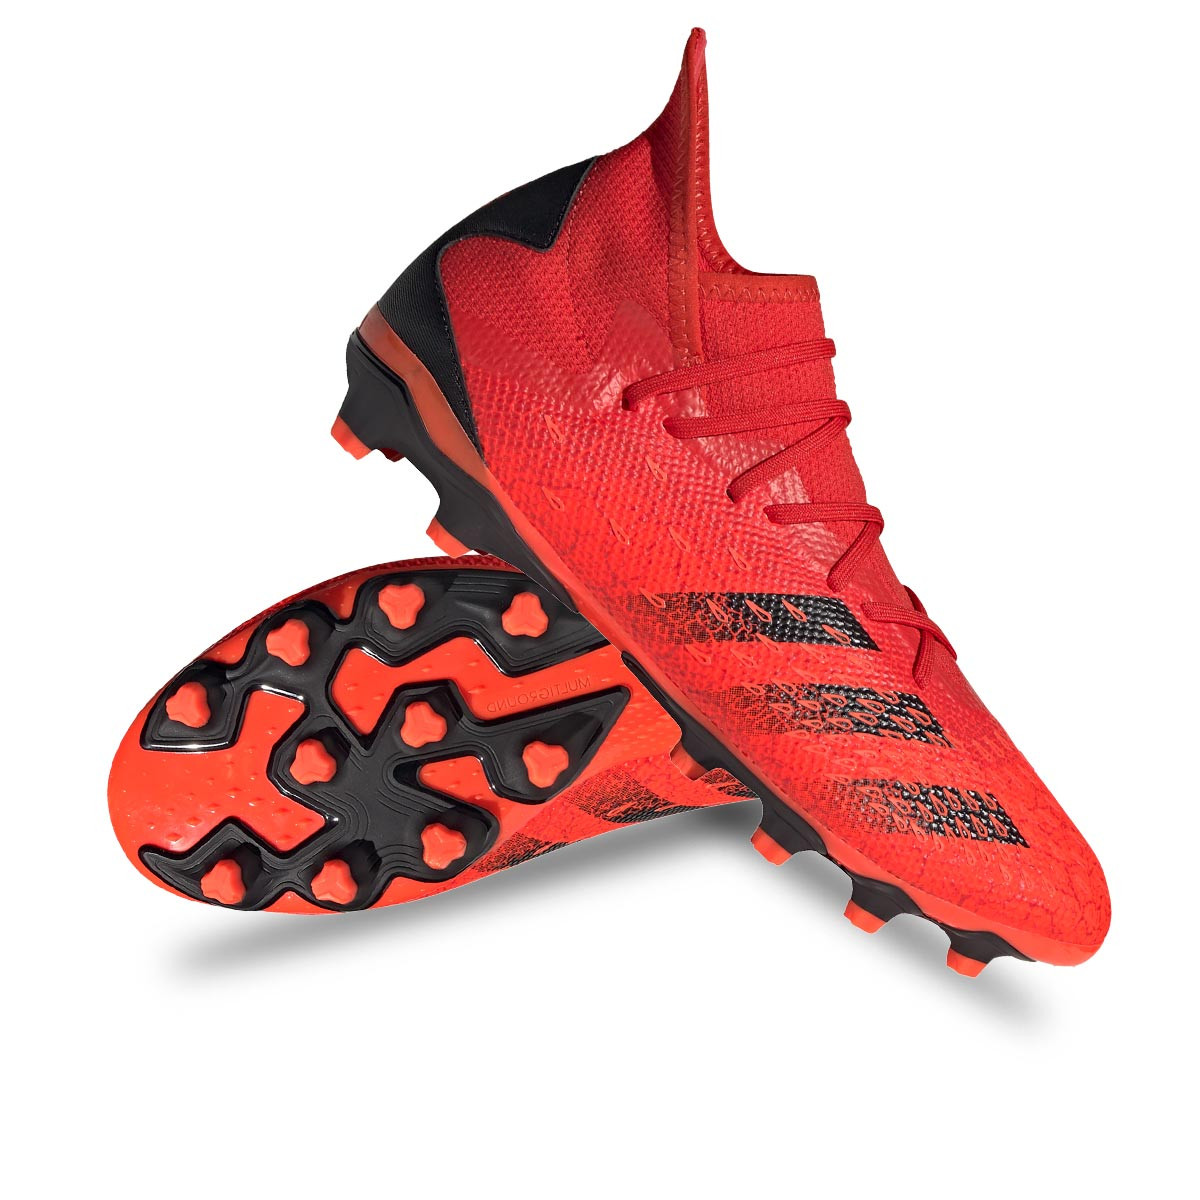 Football Boots adidas Predator Freak .3 MG Red-Black-Solar red ...